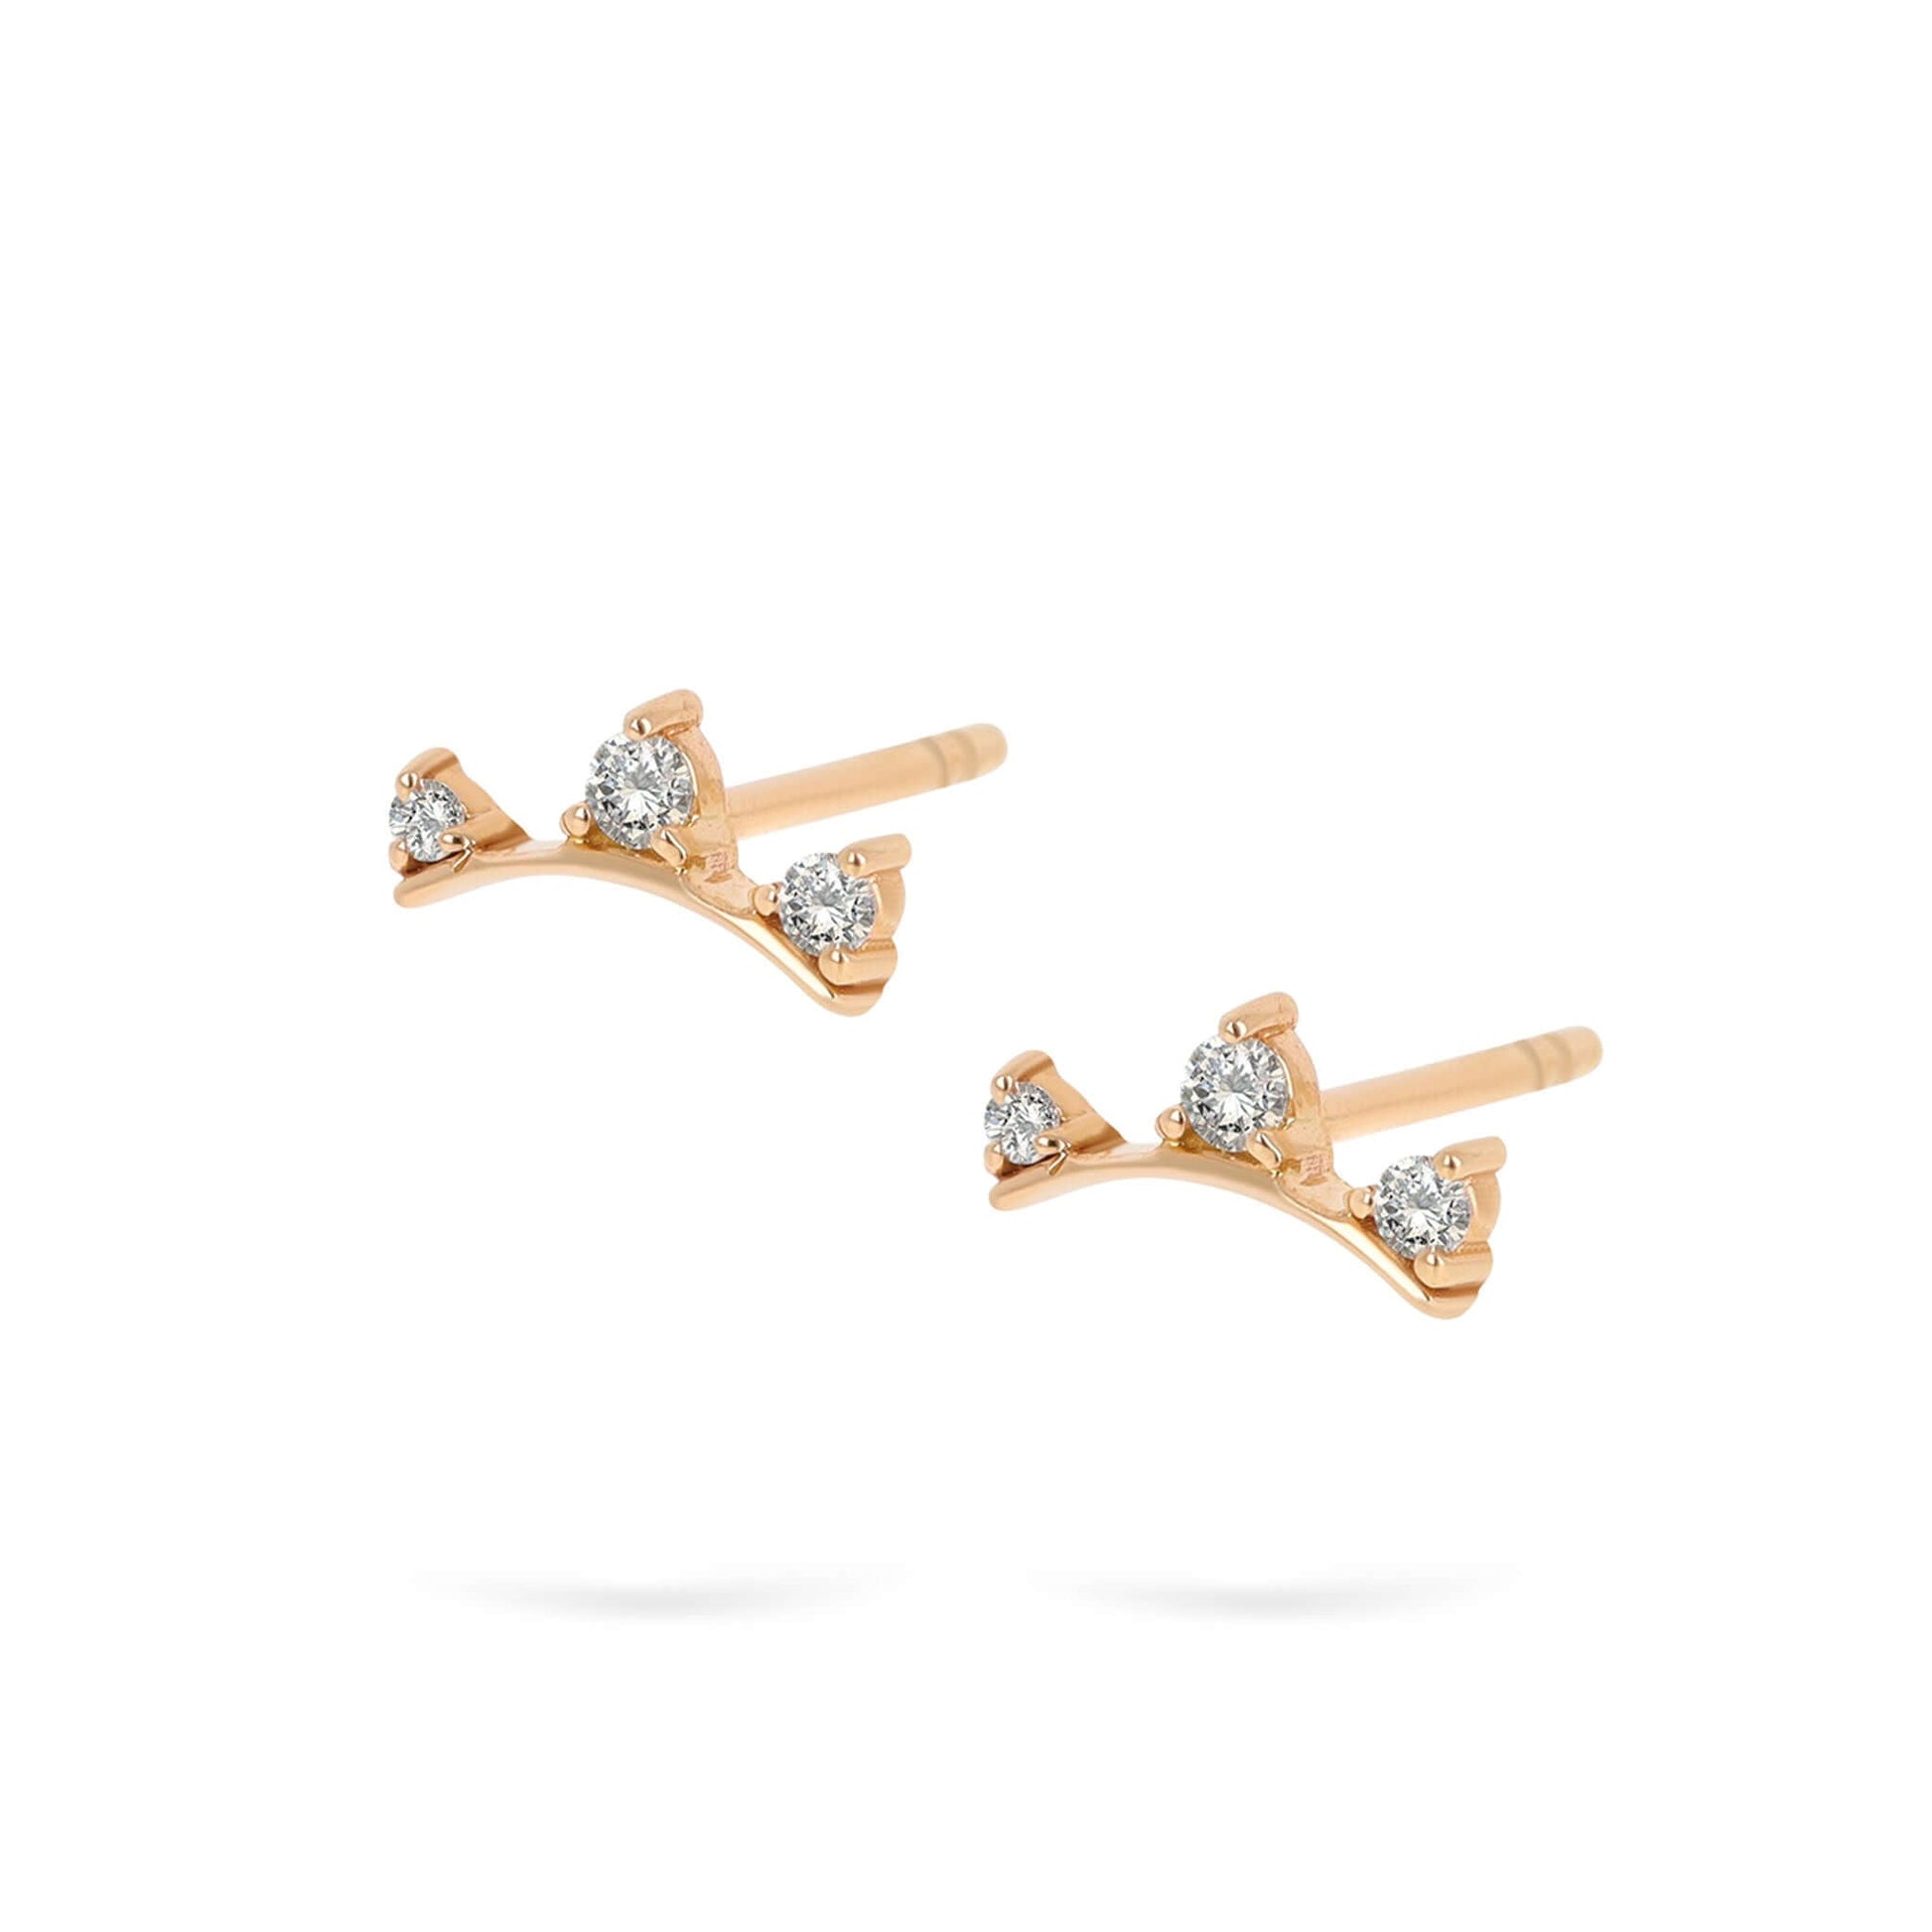 Gilda Jewelry Cheerful Trio | Diamond Earrings | 14K Gold - earrings Zengoda Shop online from Artisan Brands